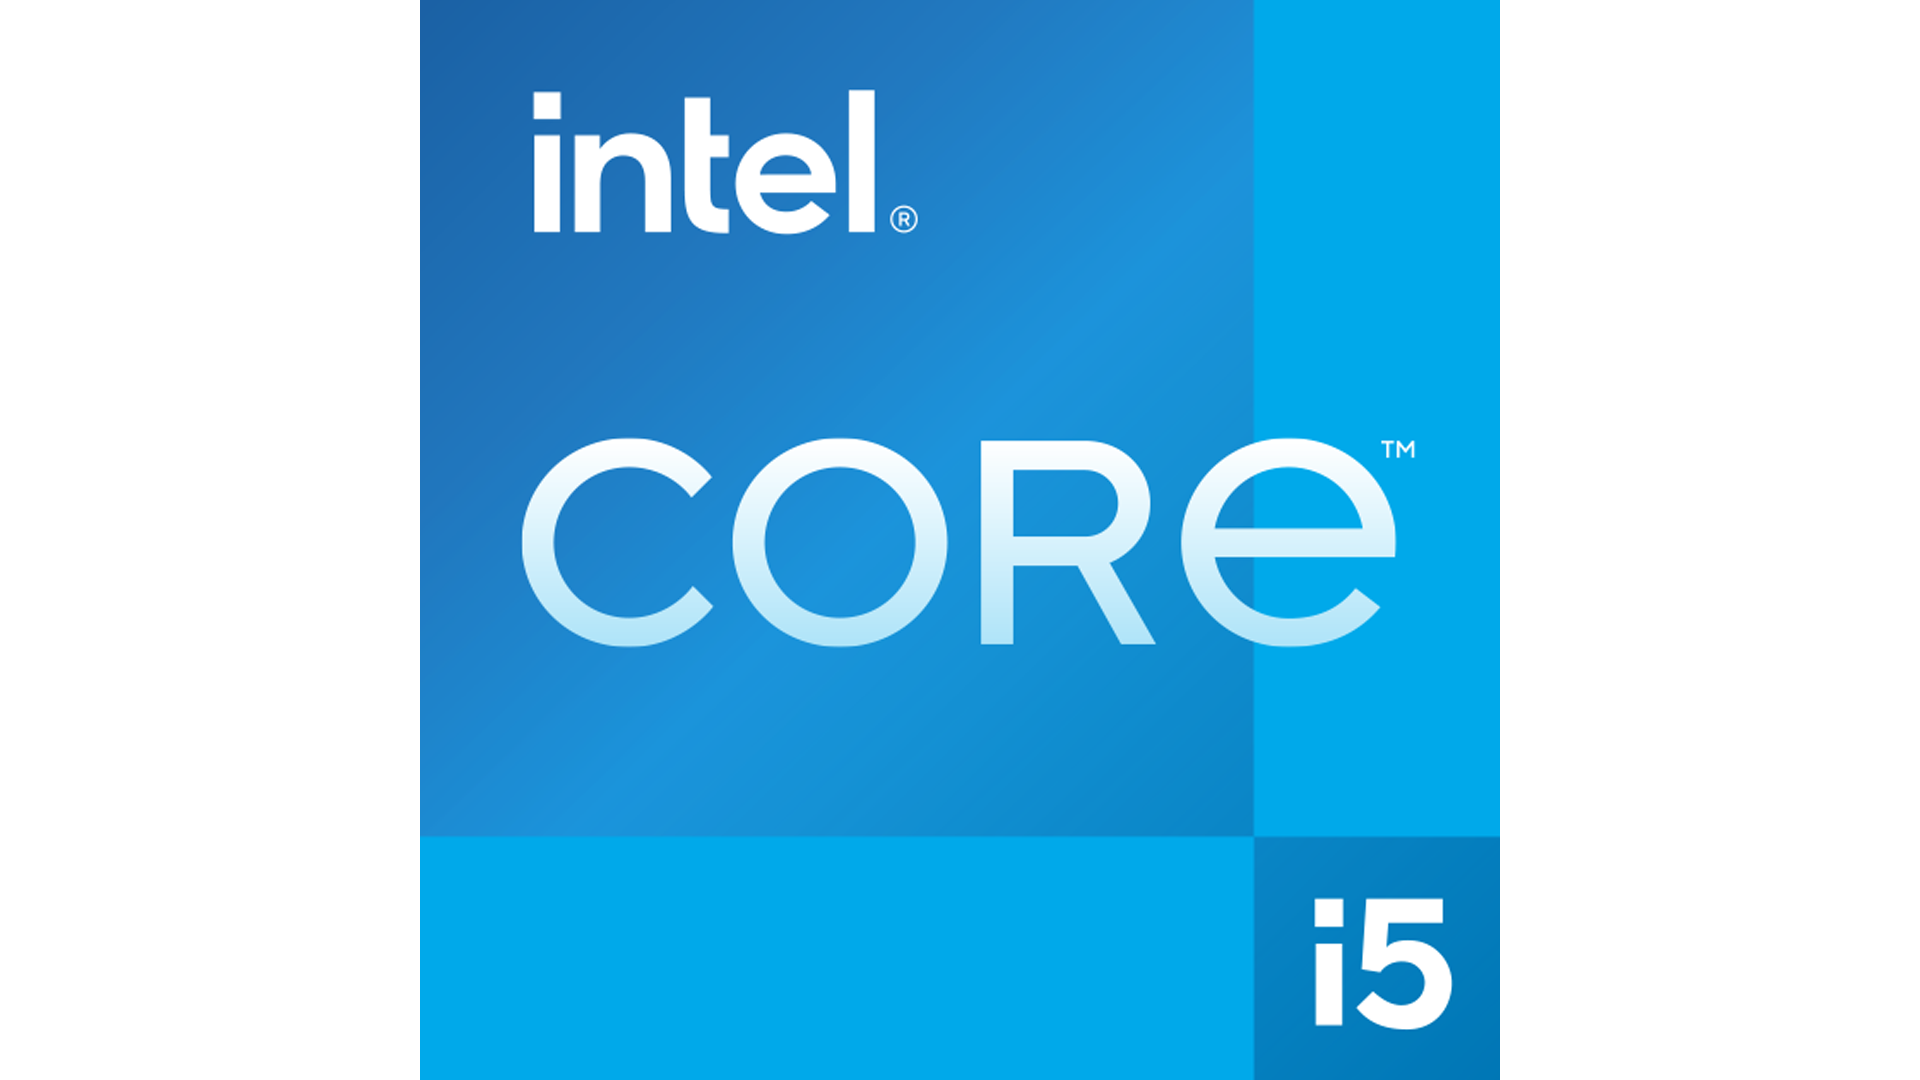 Intel® Core™ i5-1135G7 Processor